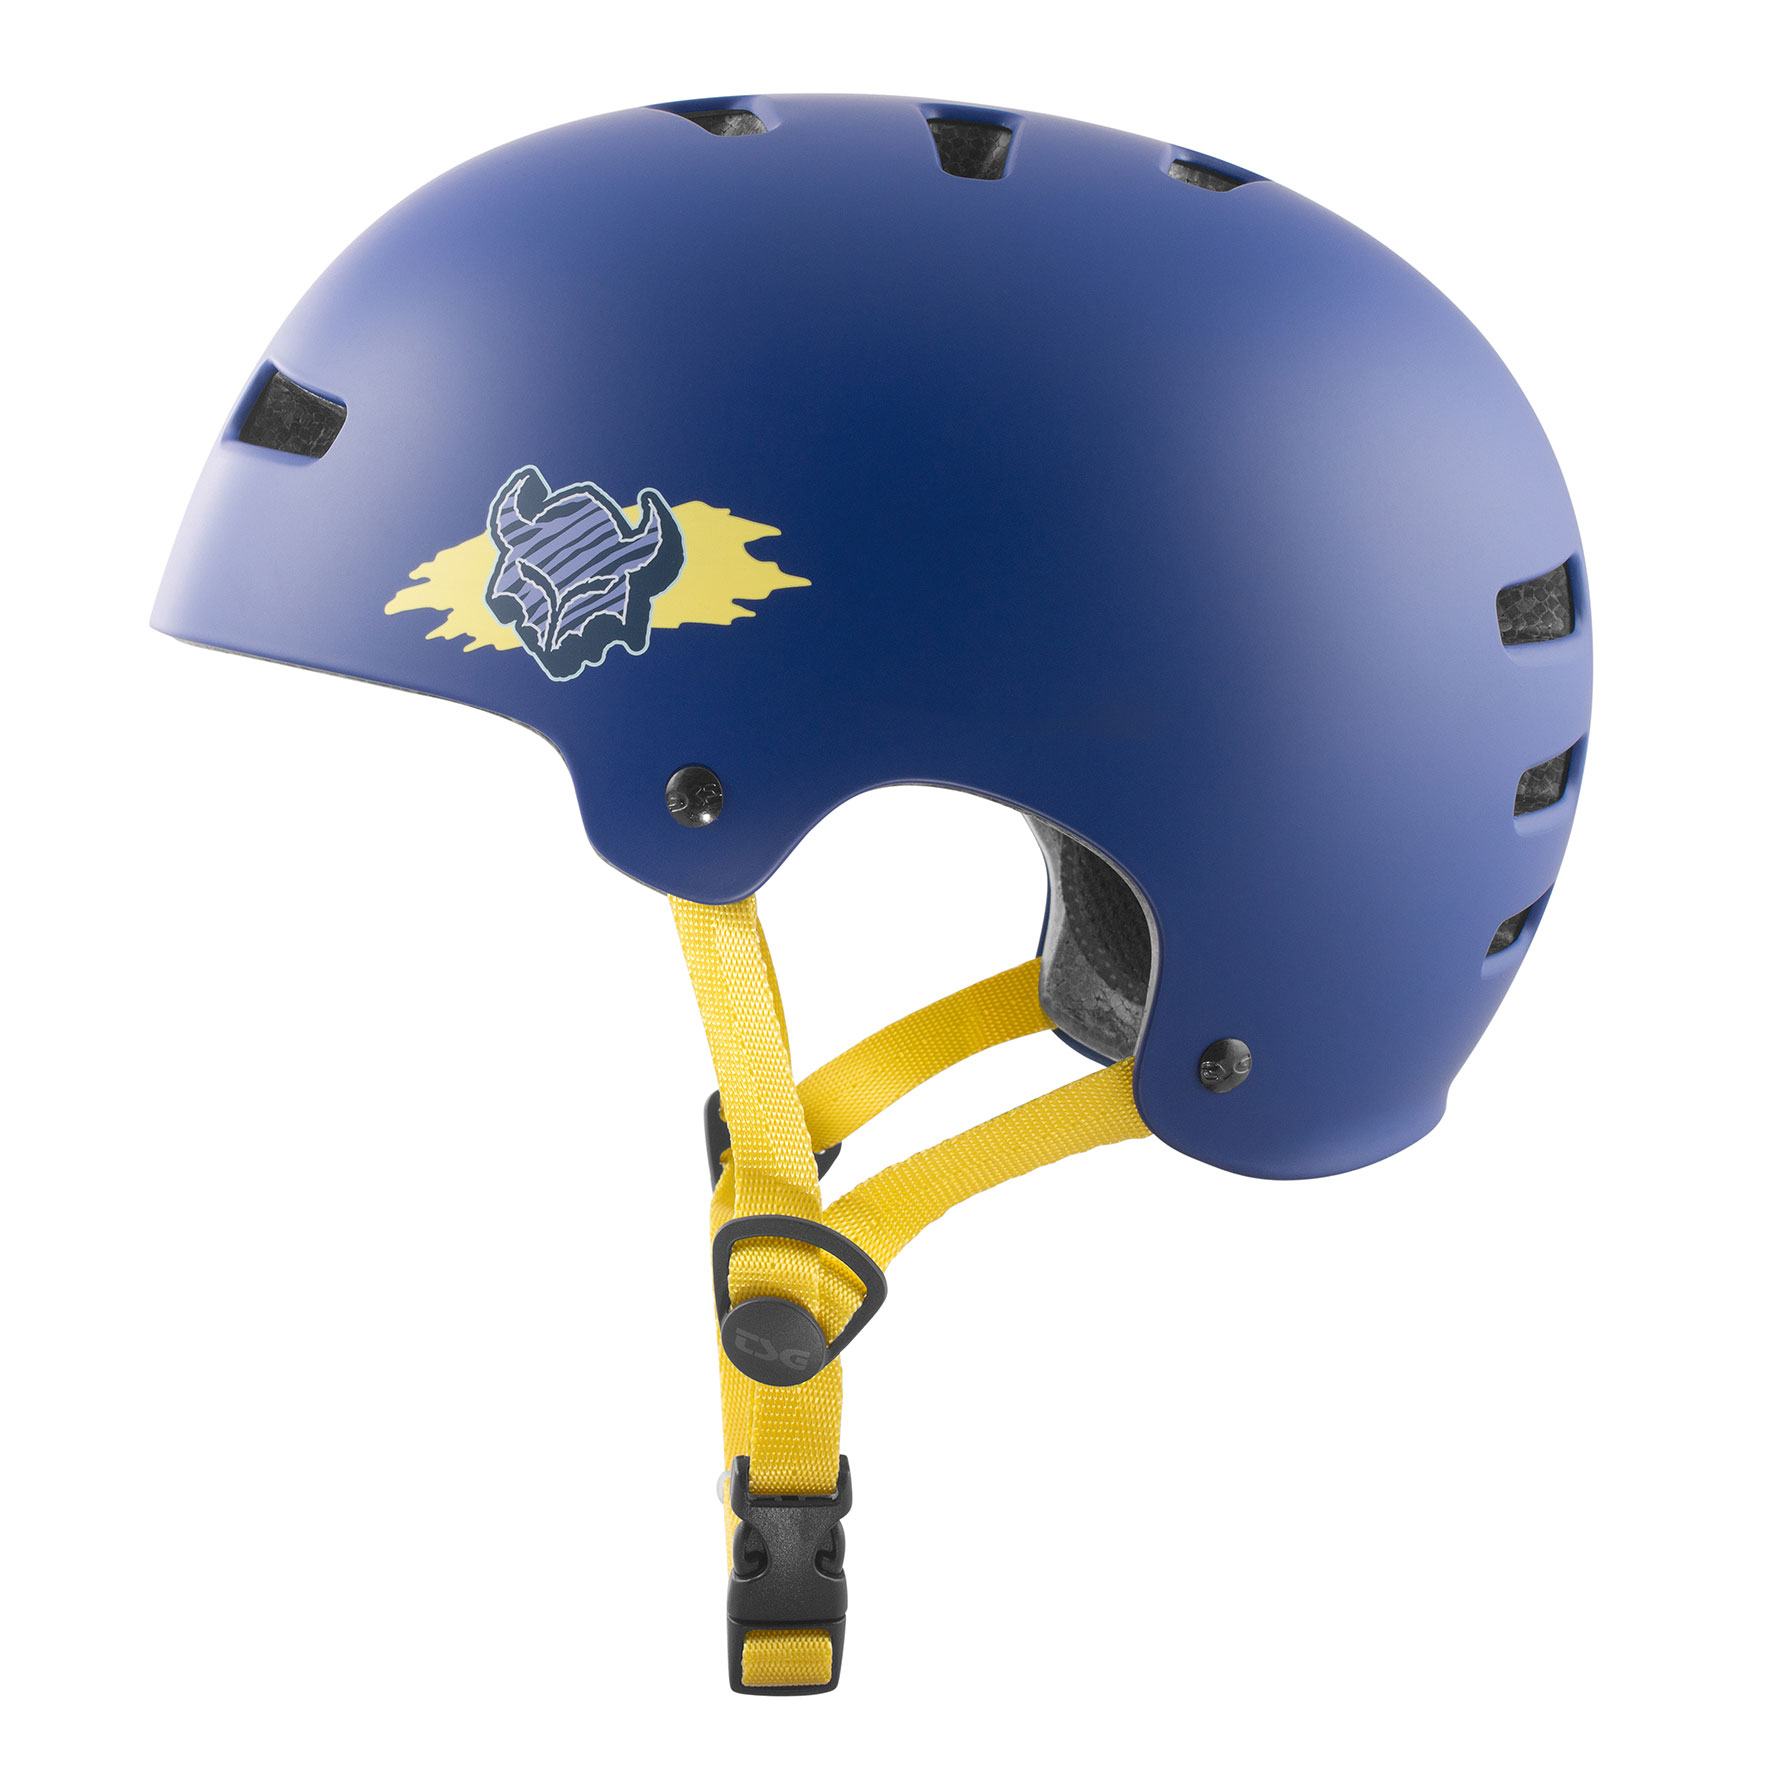 TSG Helm Evolution Graphic Design (ripped)